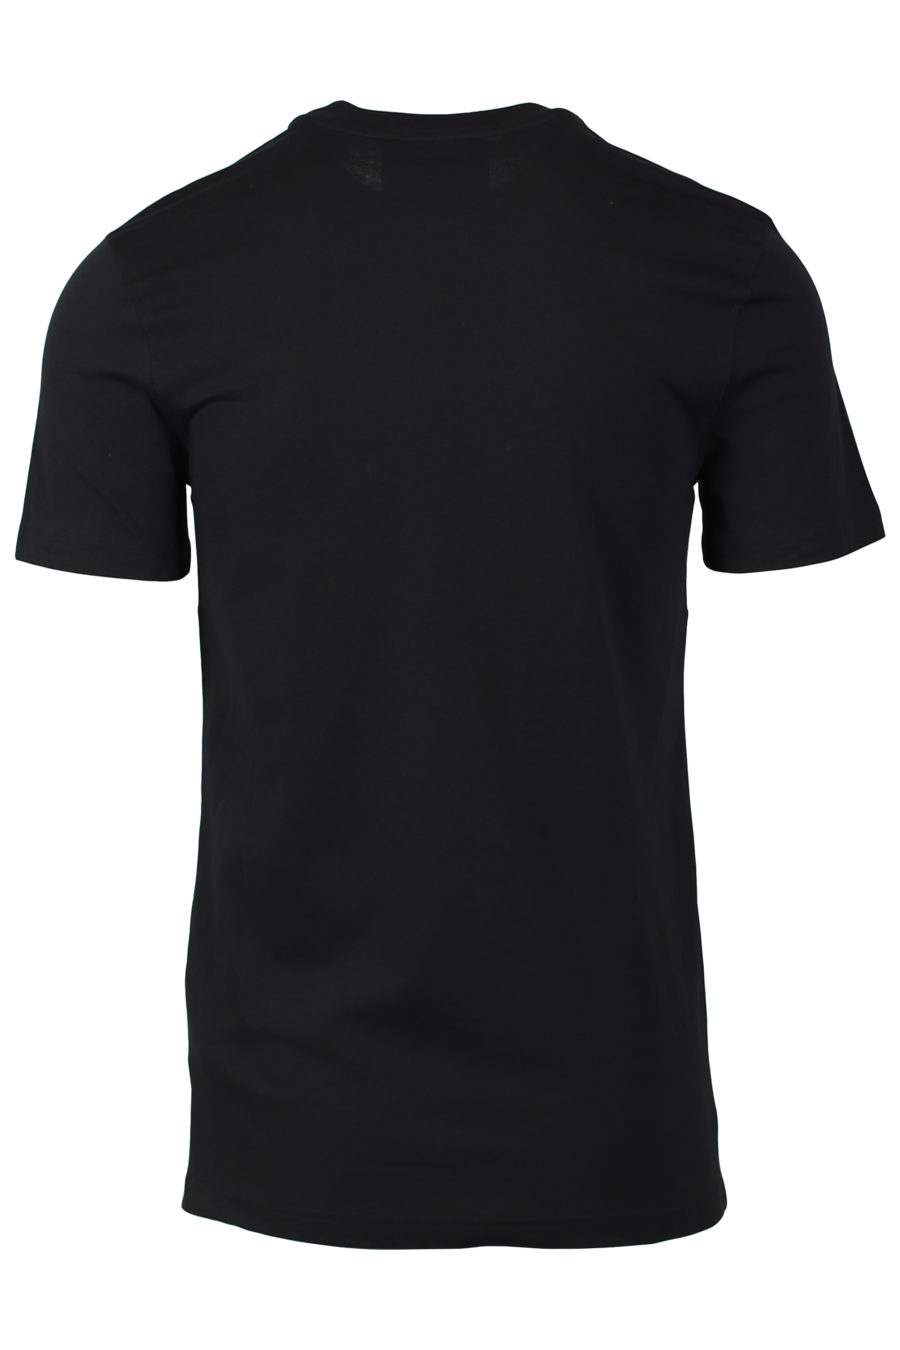 Camiseta negra logo blanco y negro - IMG 0946